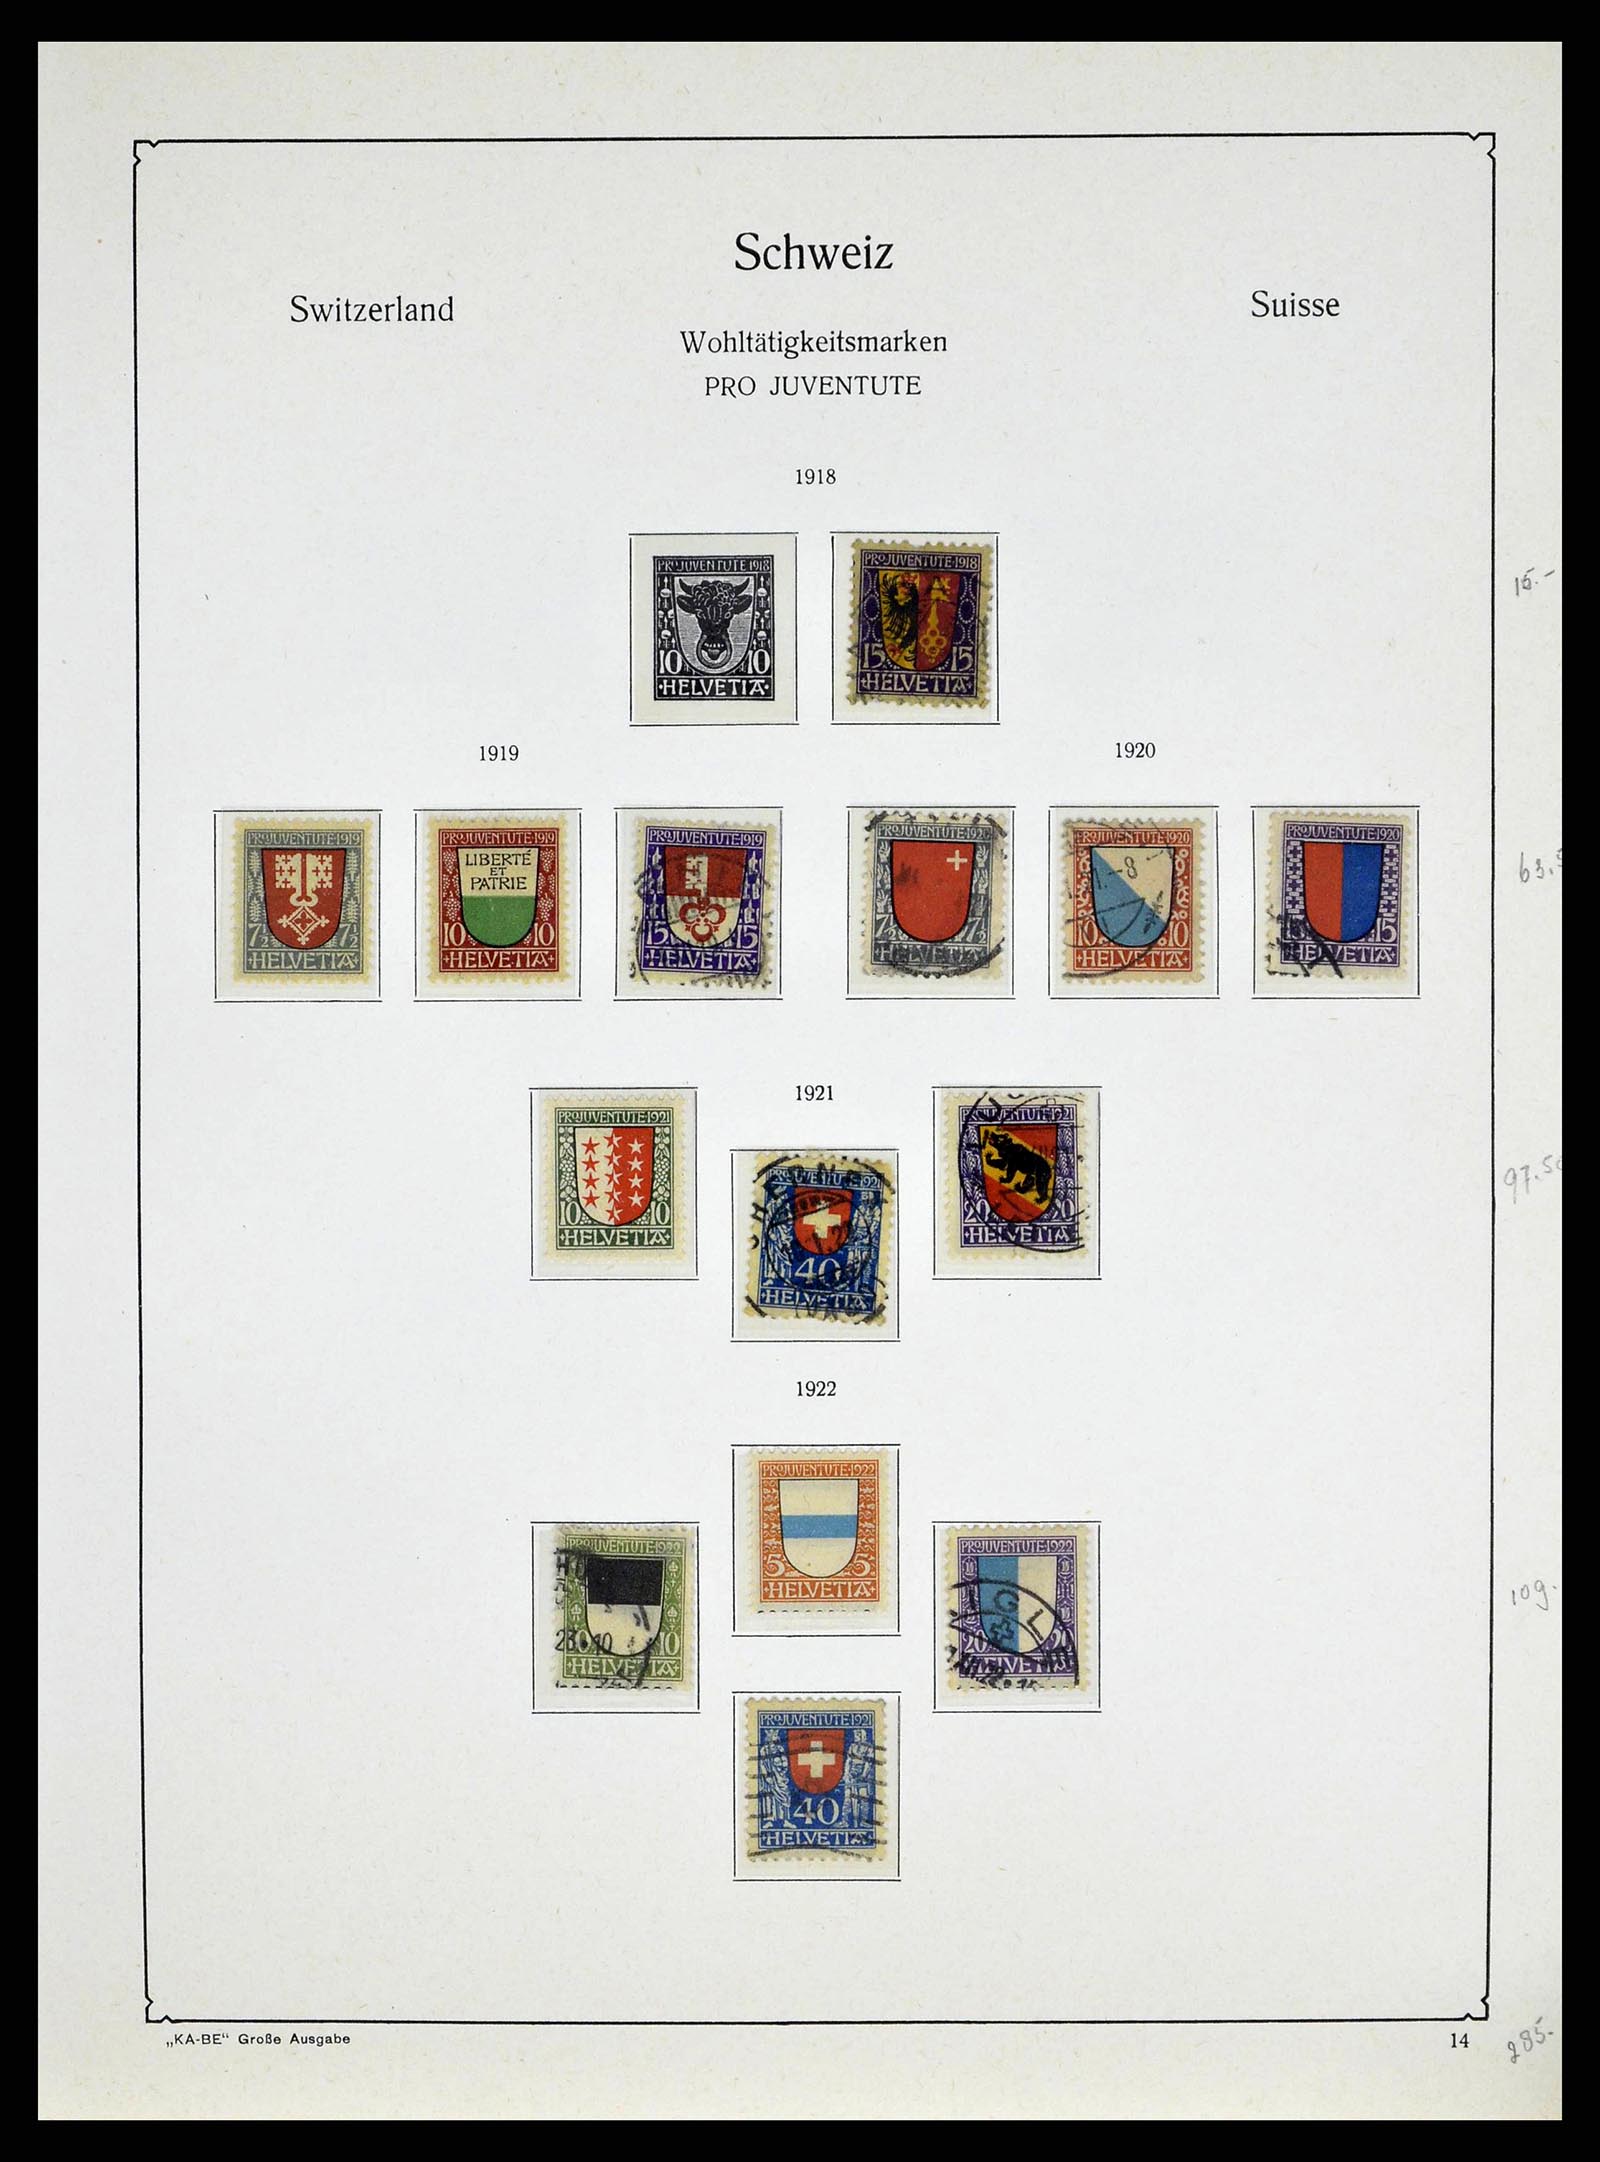 38706 0014 - Stamp collection 38706 Switzerland 1854-1985.